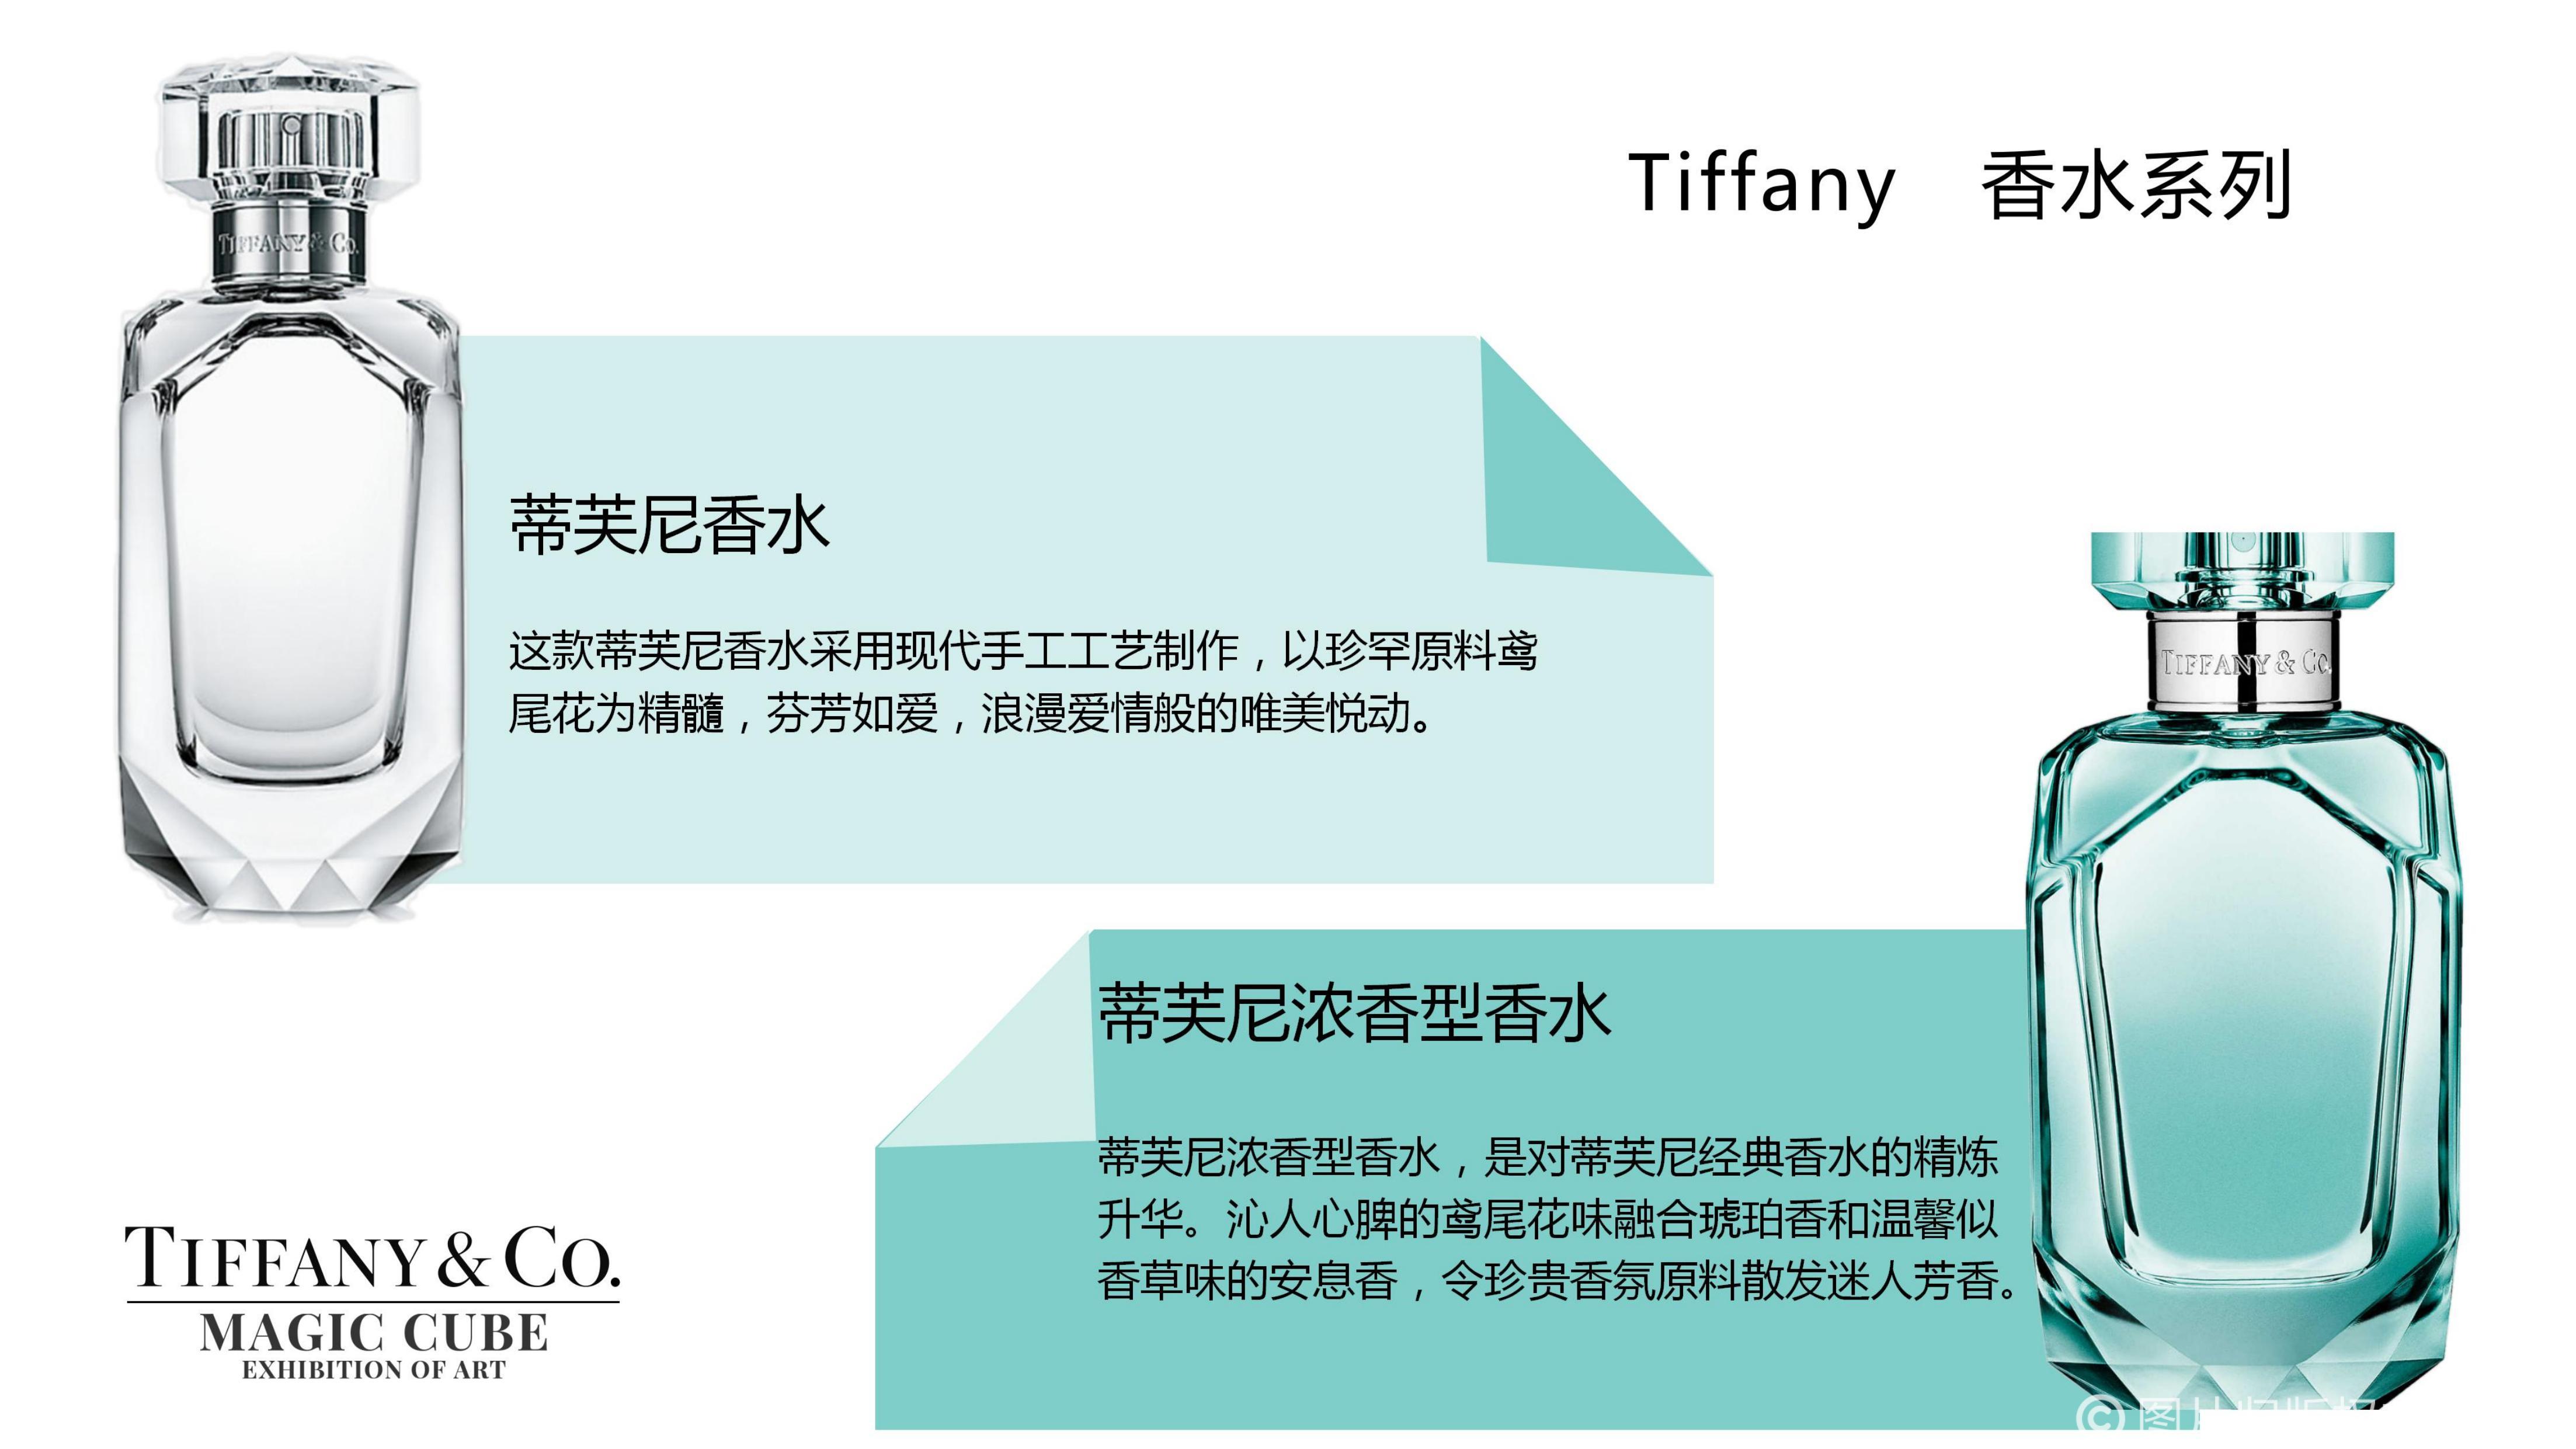 Tiffany & Co. 蒂芙尼 在节日遇见爱 | COVER STORY_SG精品网